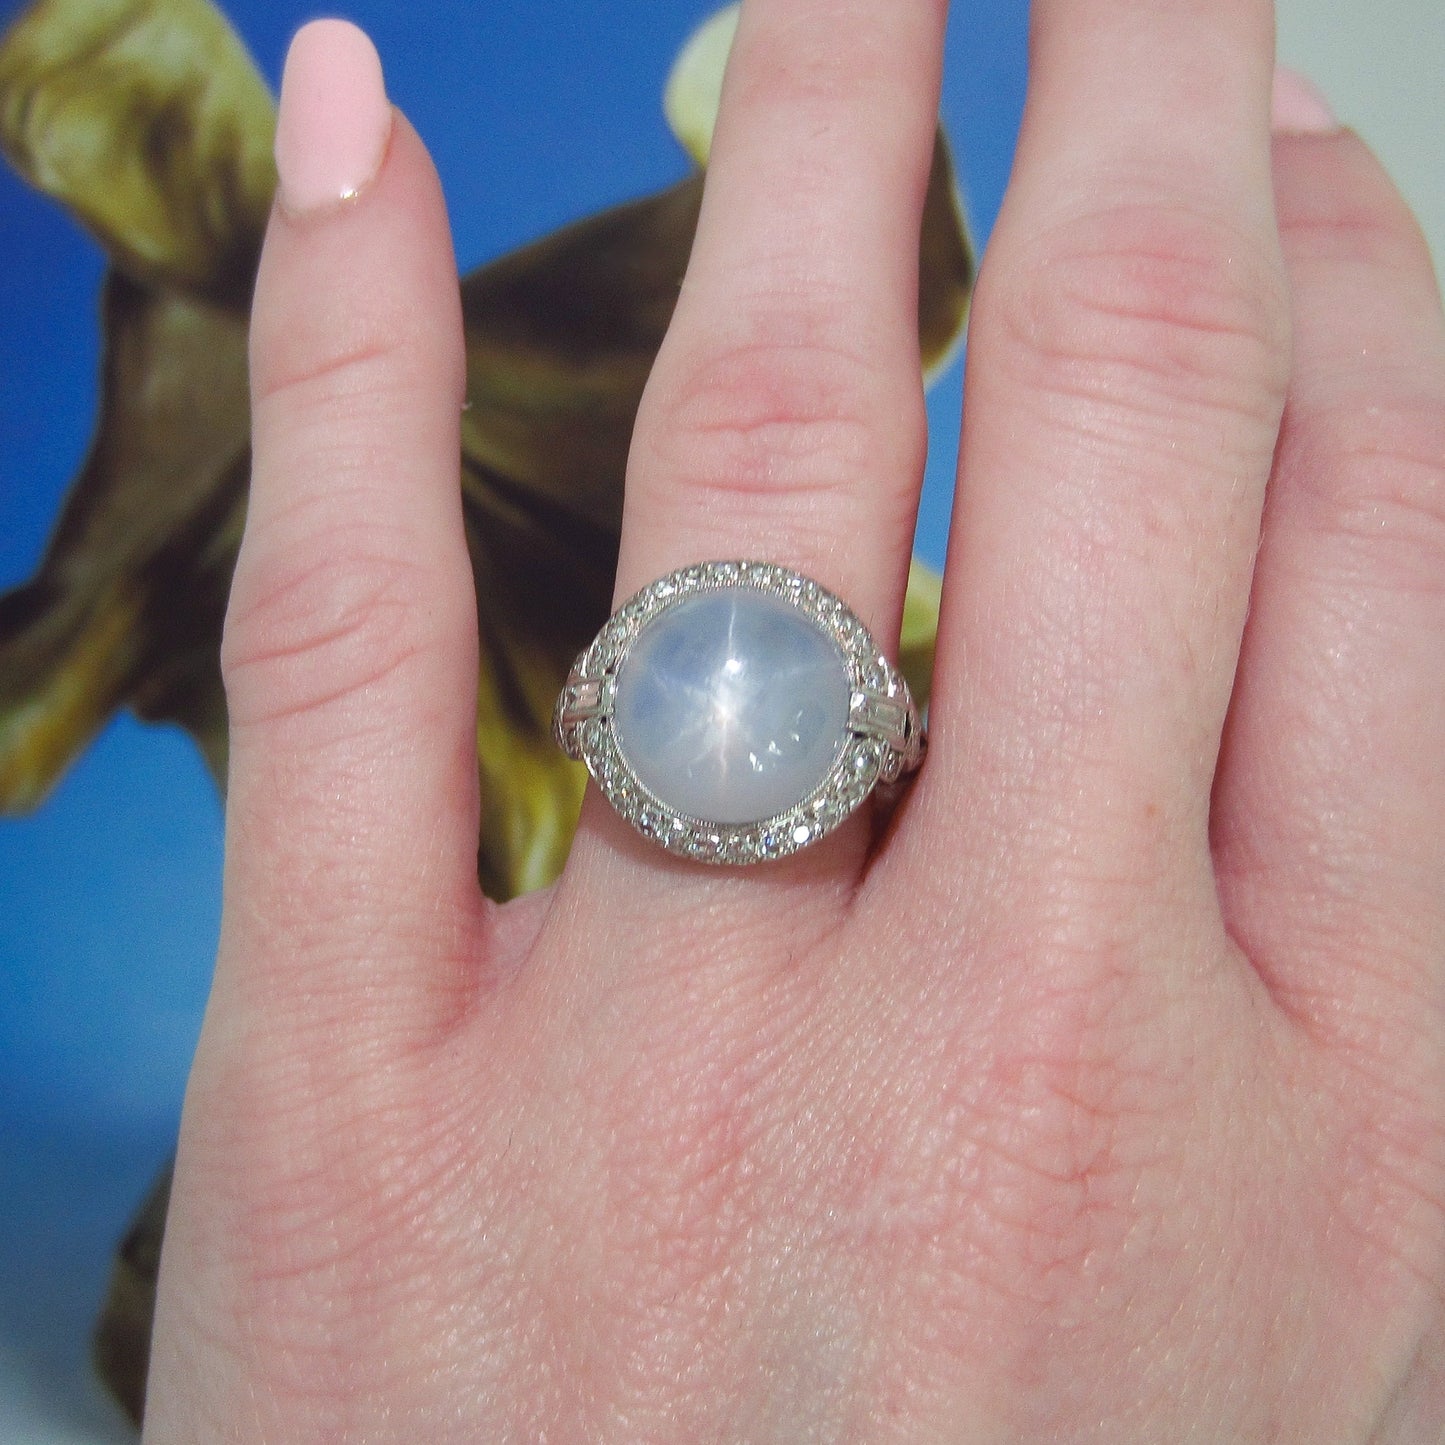 SOLD-Art Deco Star Sapphire and Diamond Ring Platinum c. 1930